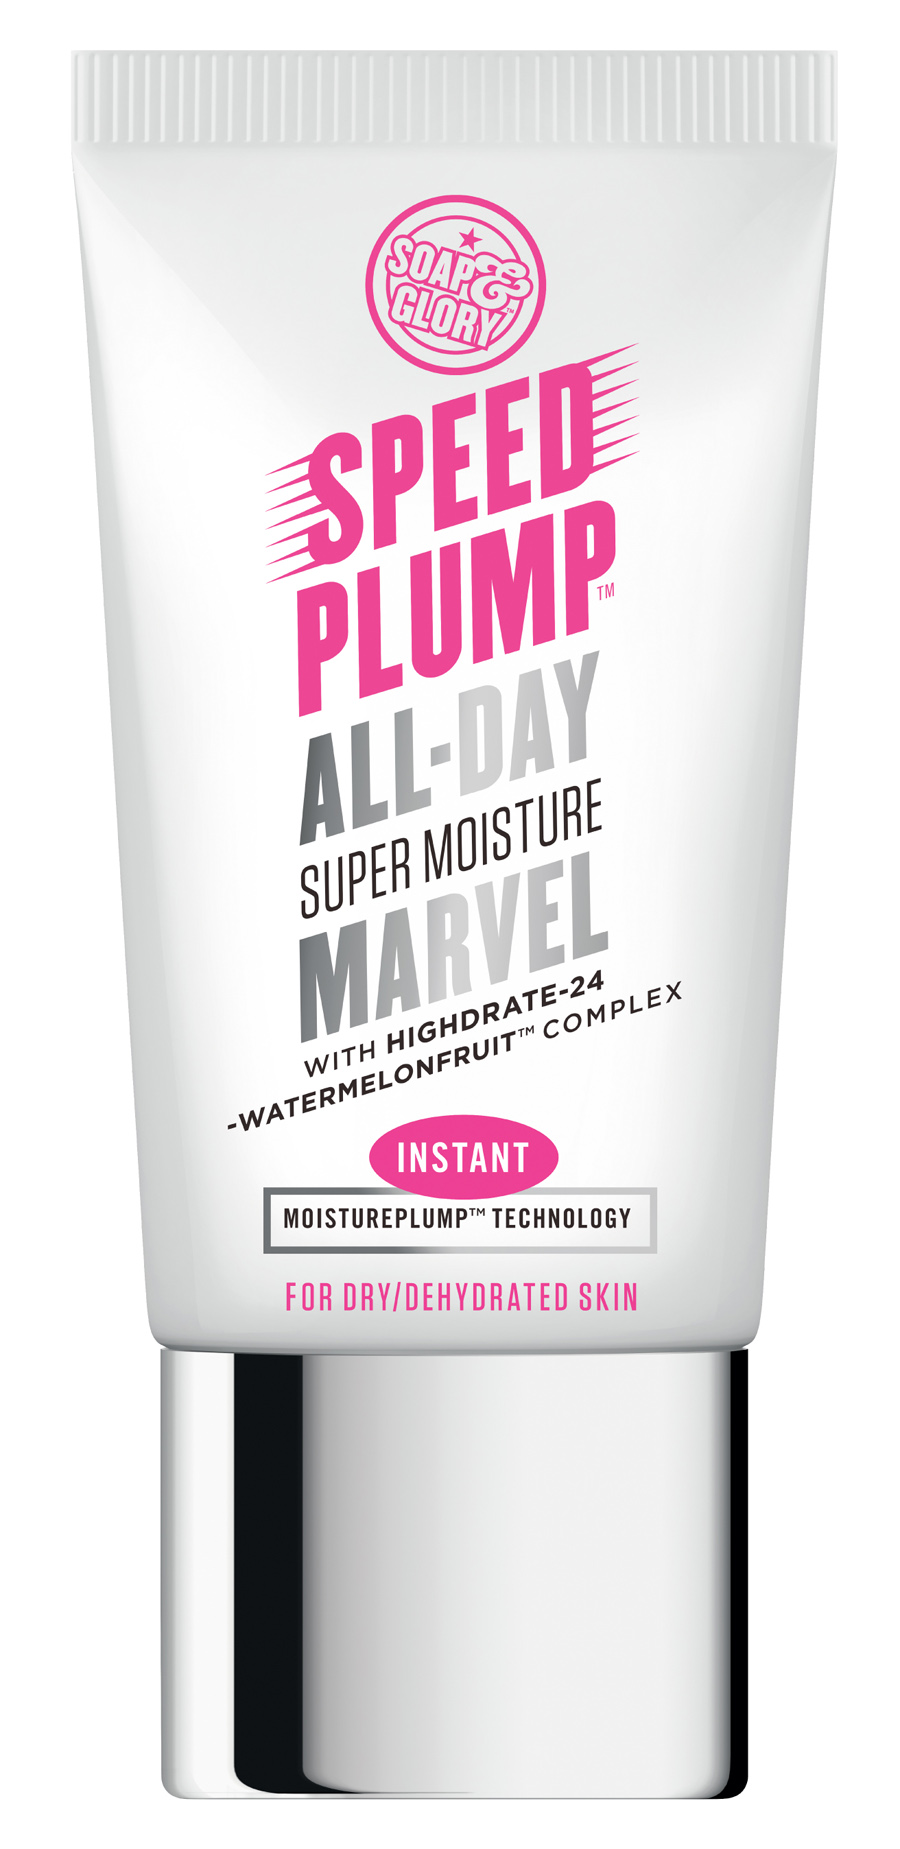 Soap & Glory SPEED PLUMPTM All-day Super Moisture Marvel